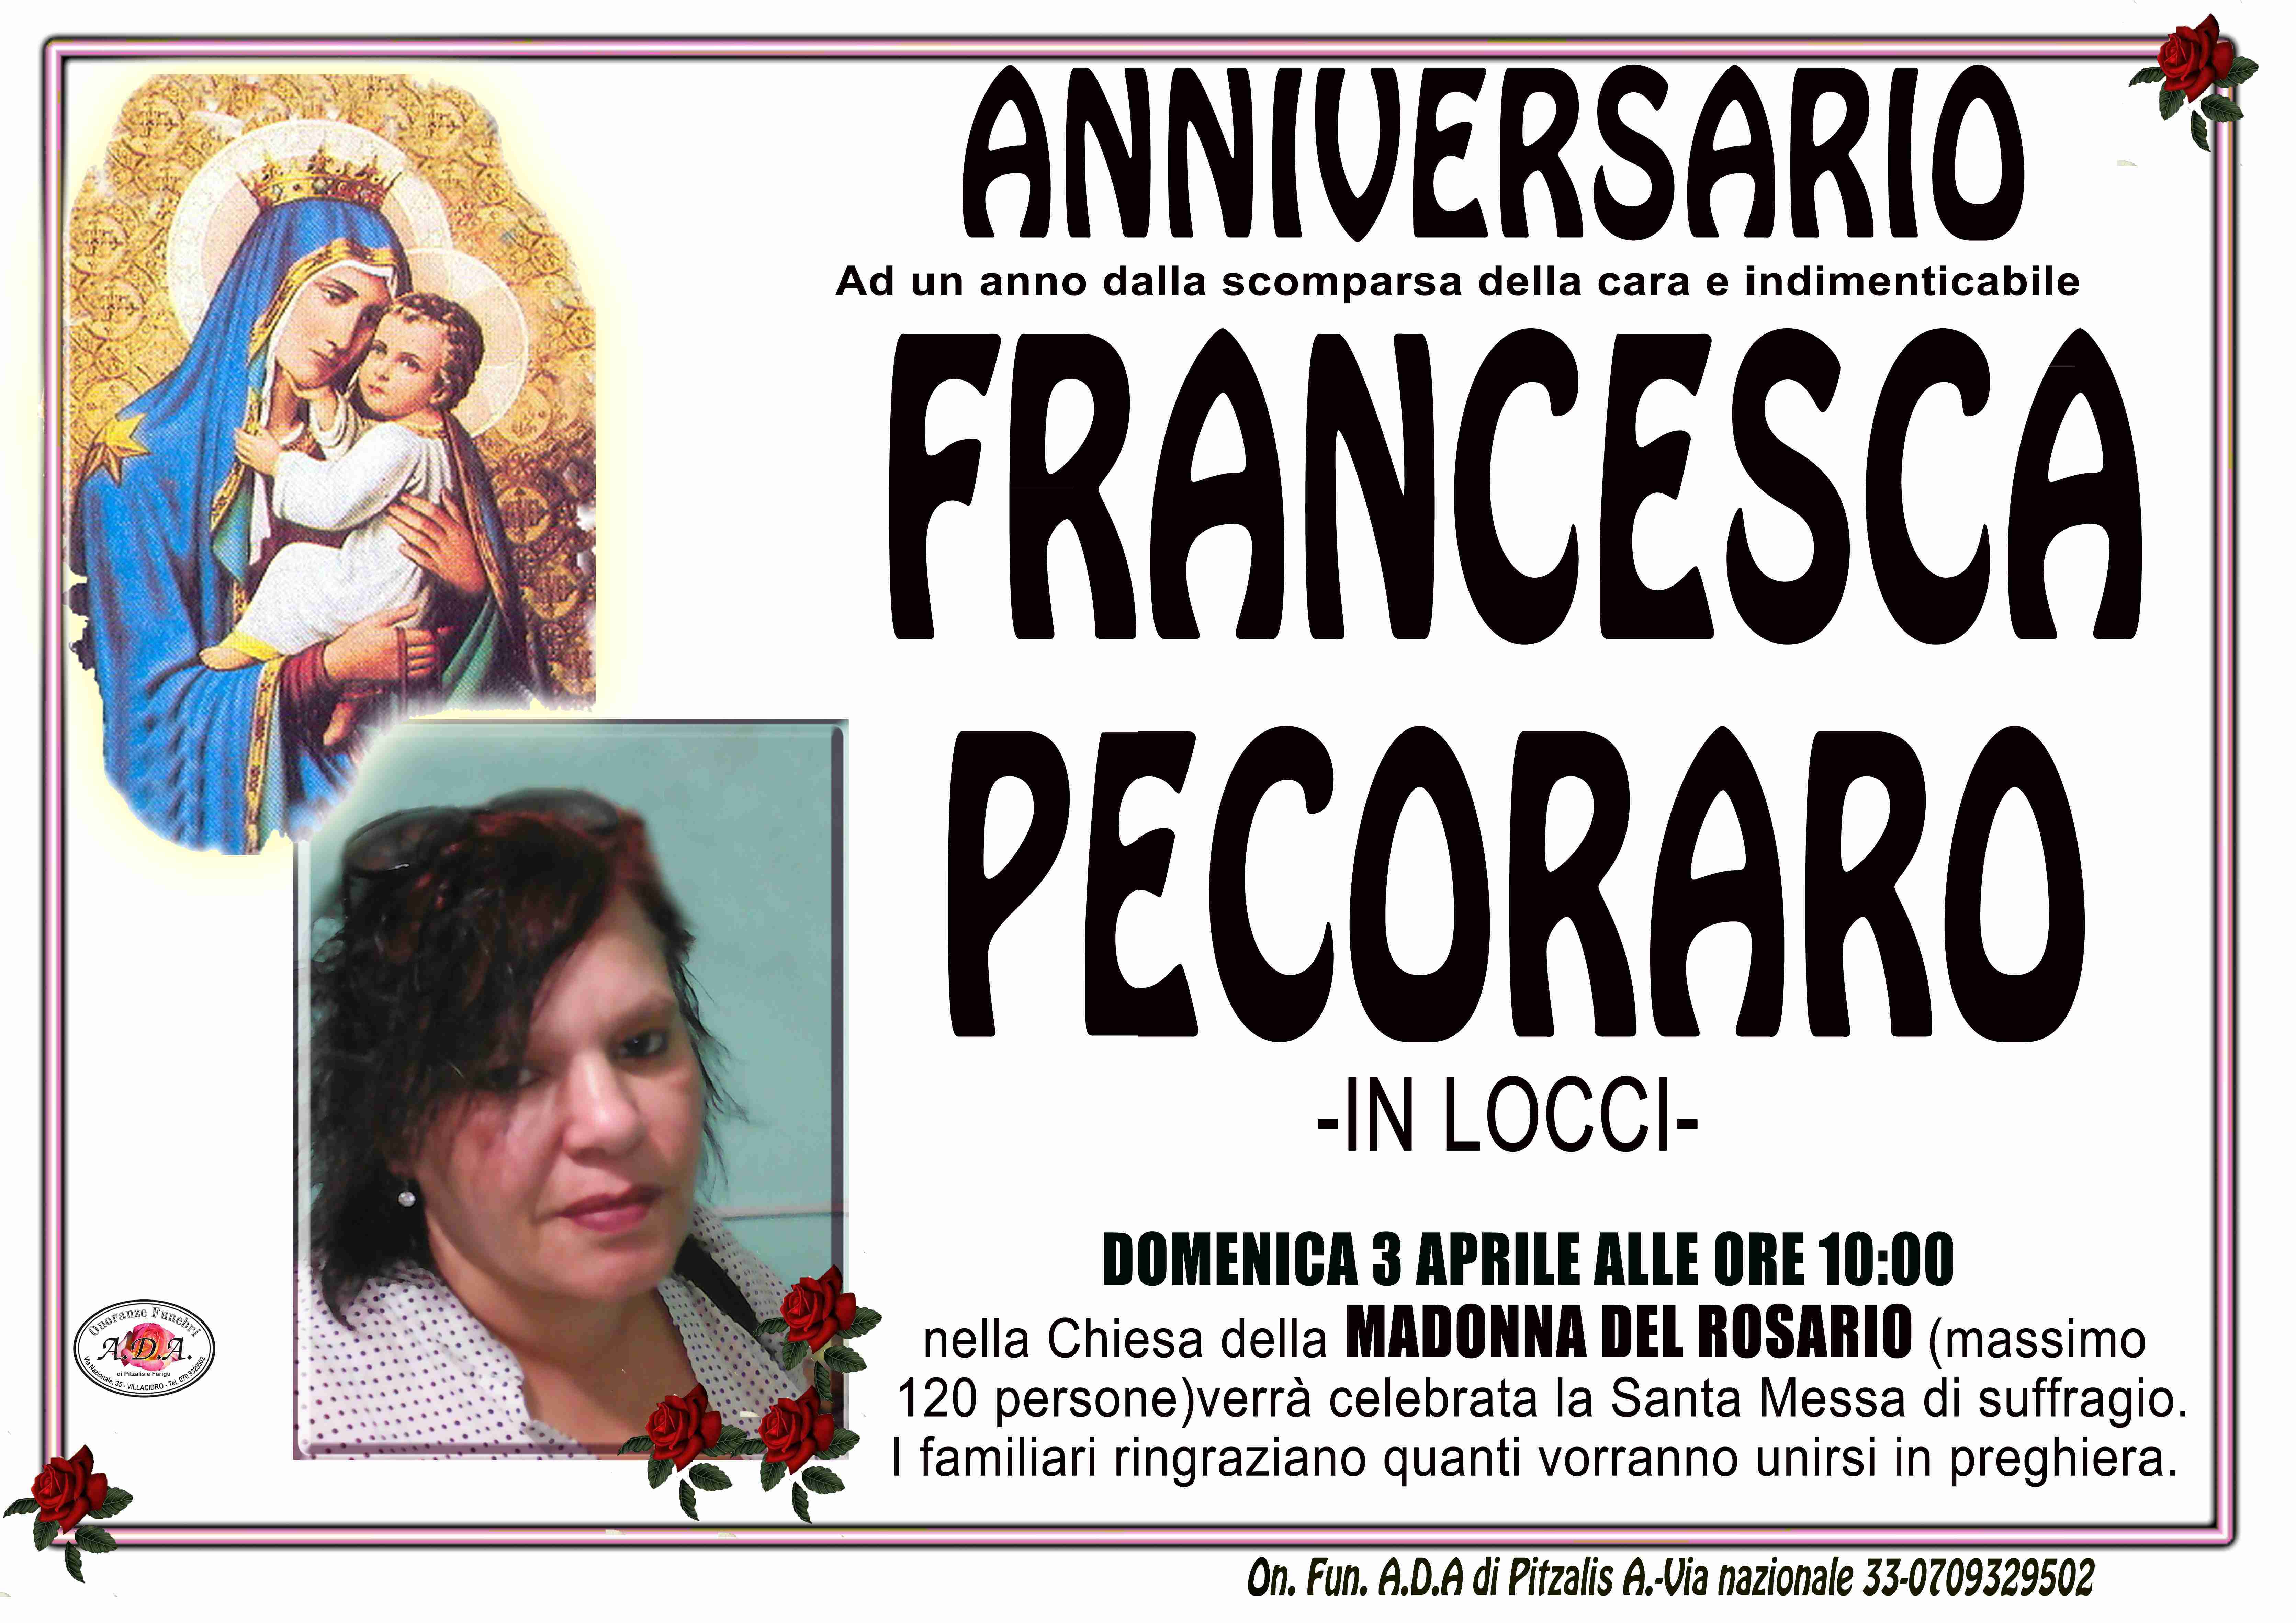 Francesca Pecoraro